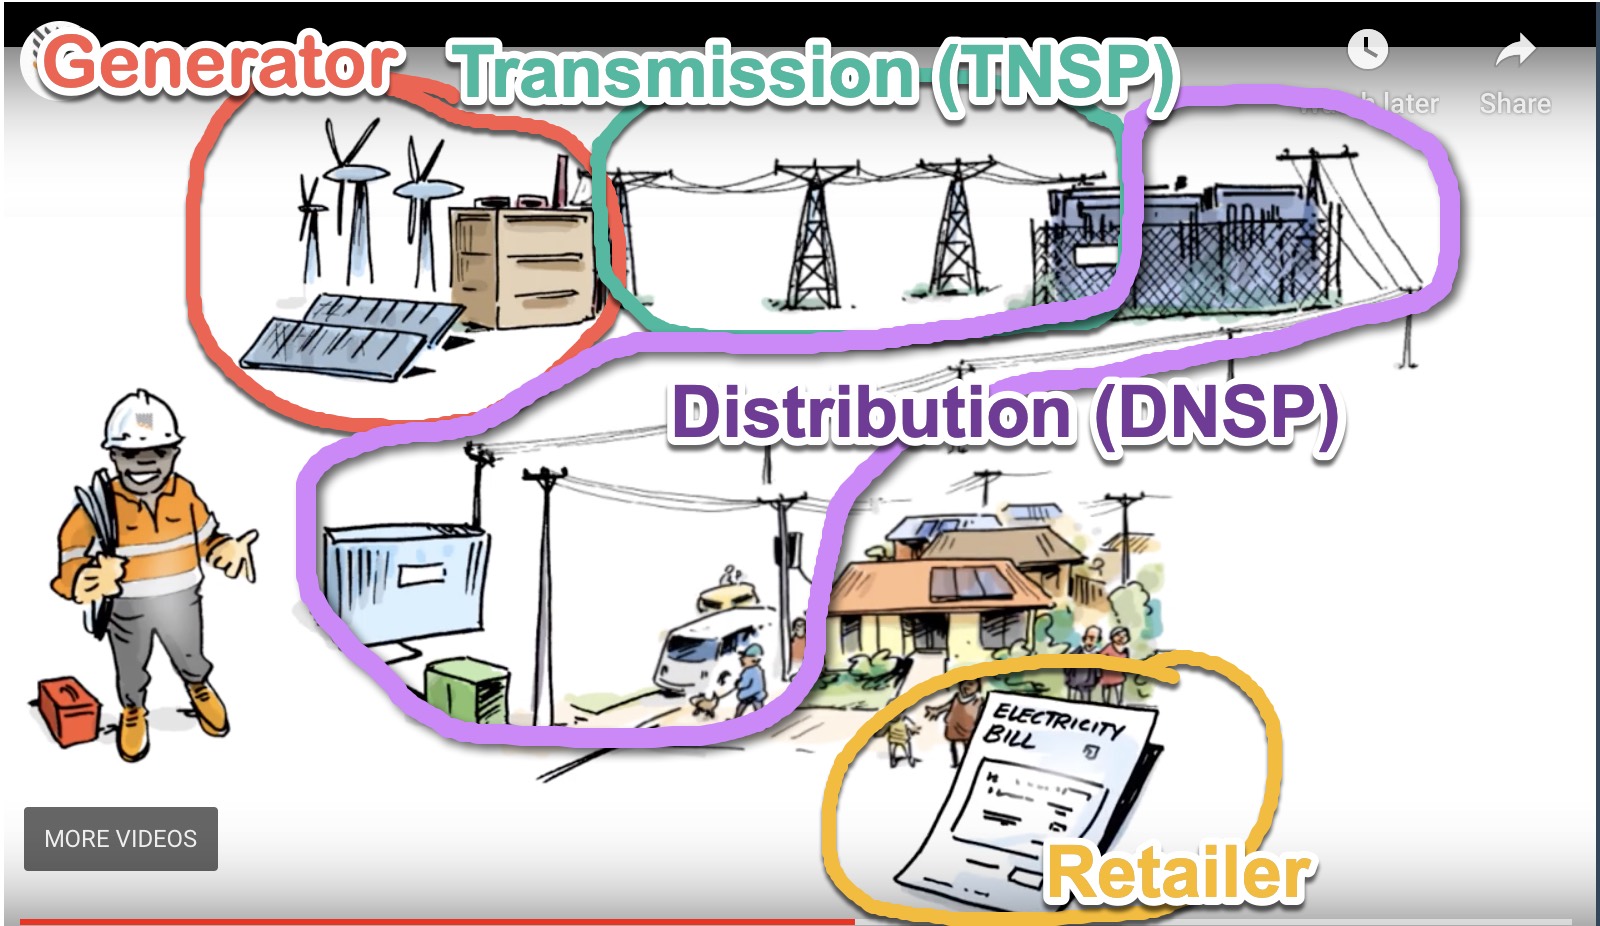 DNSP, TNSP, retailer, generator